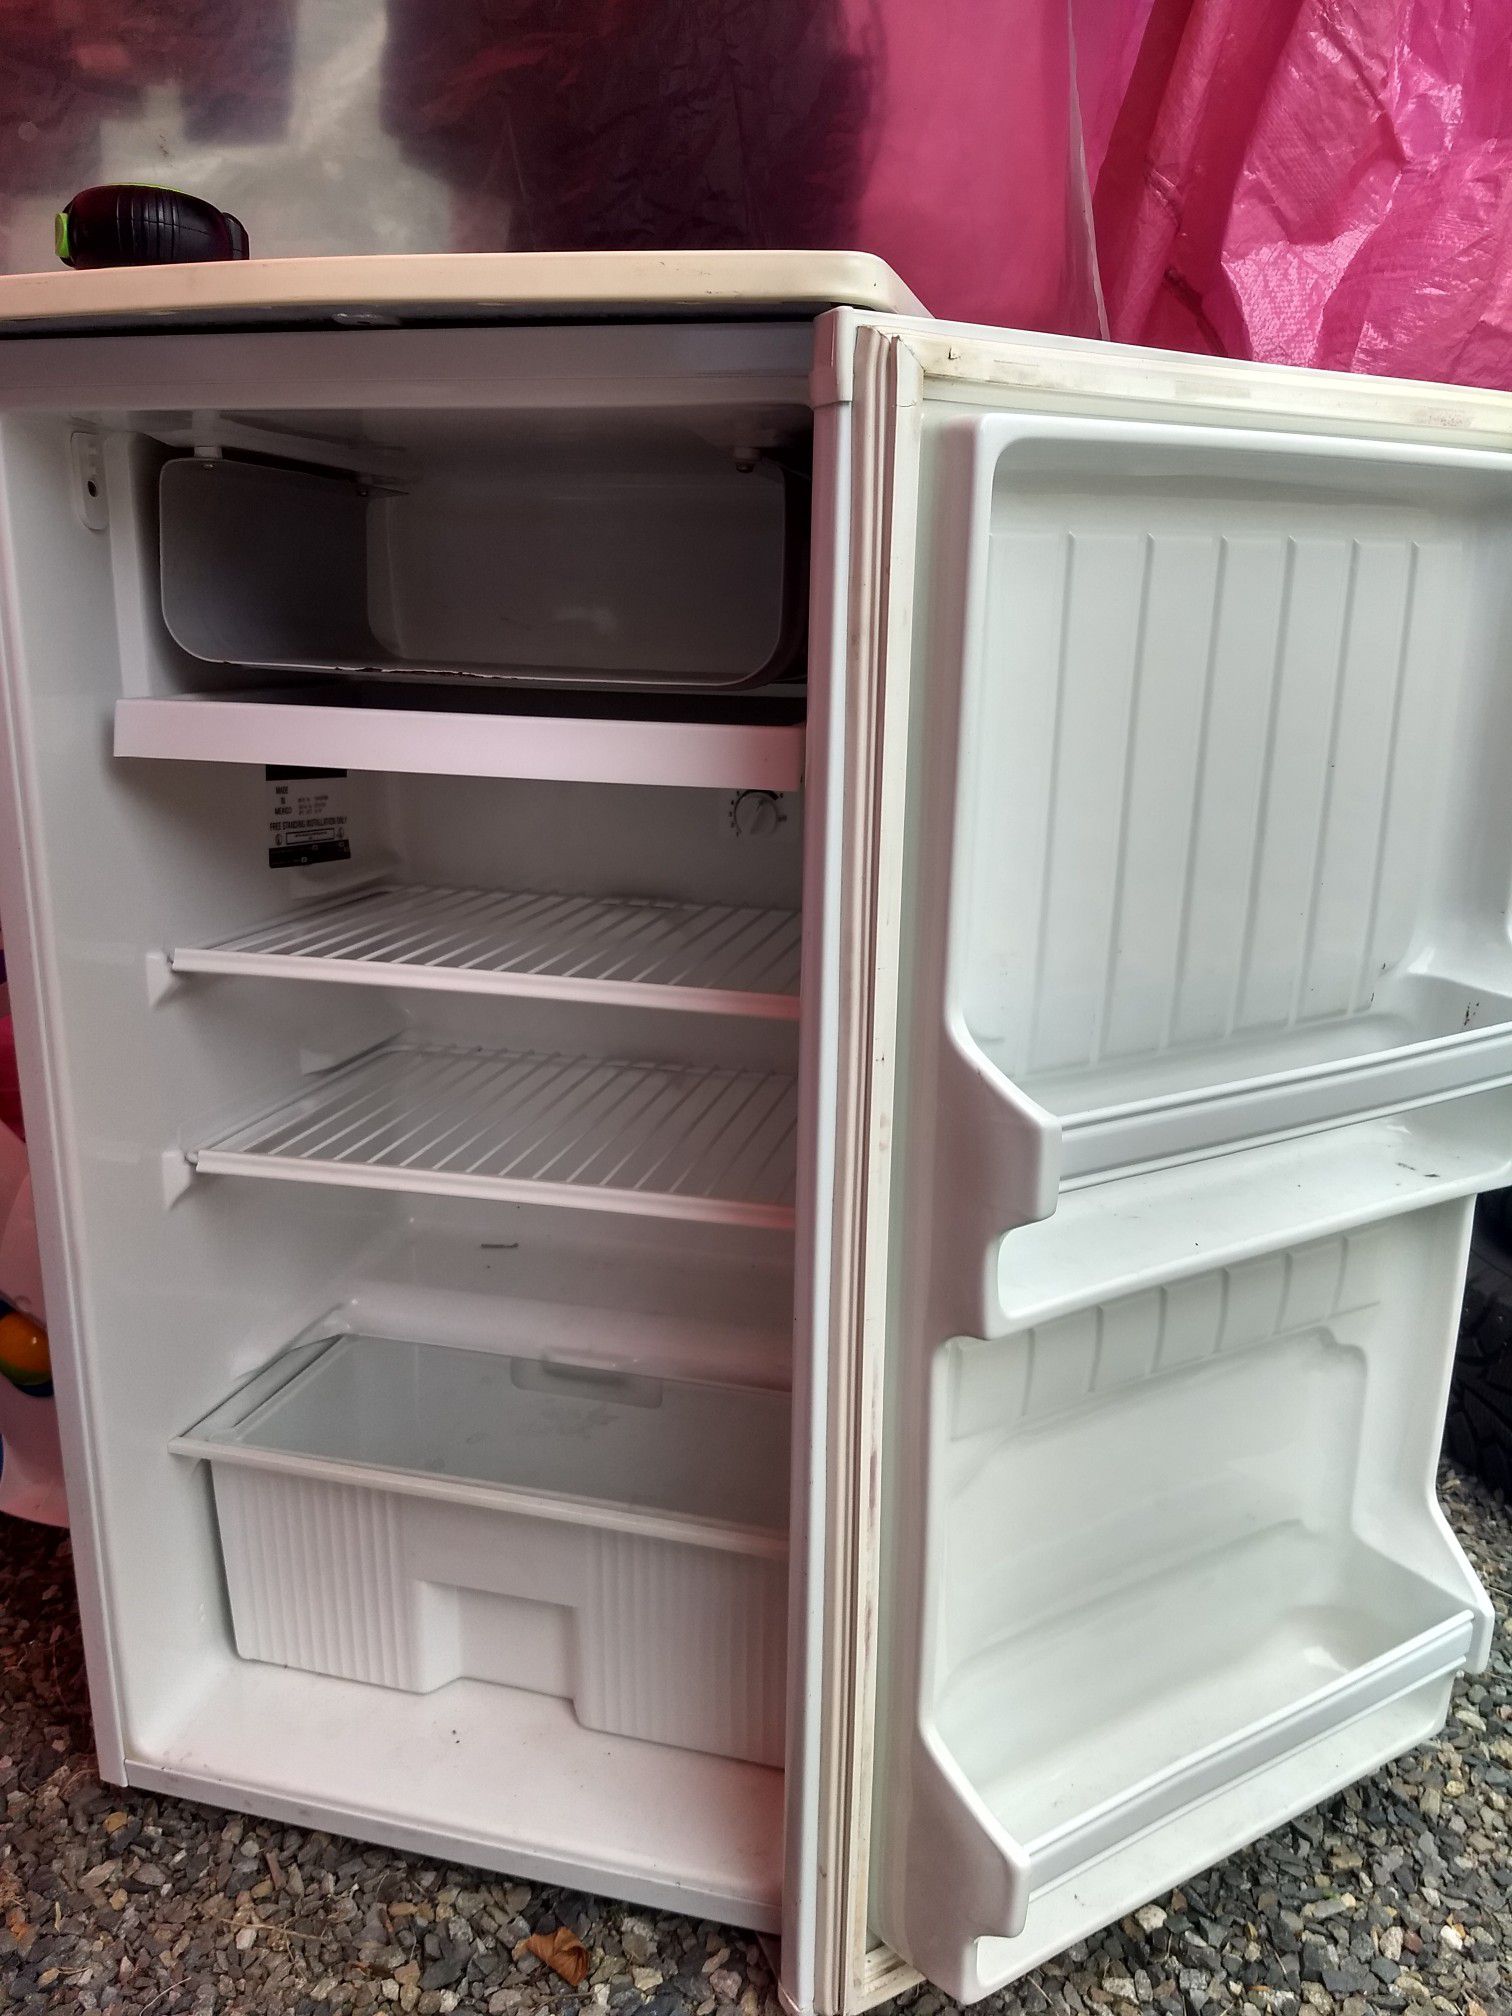 GE Mini Refrigerator with Freezer